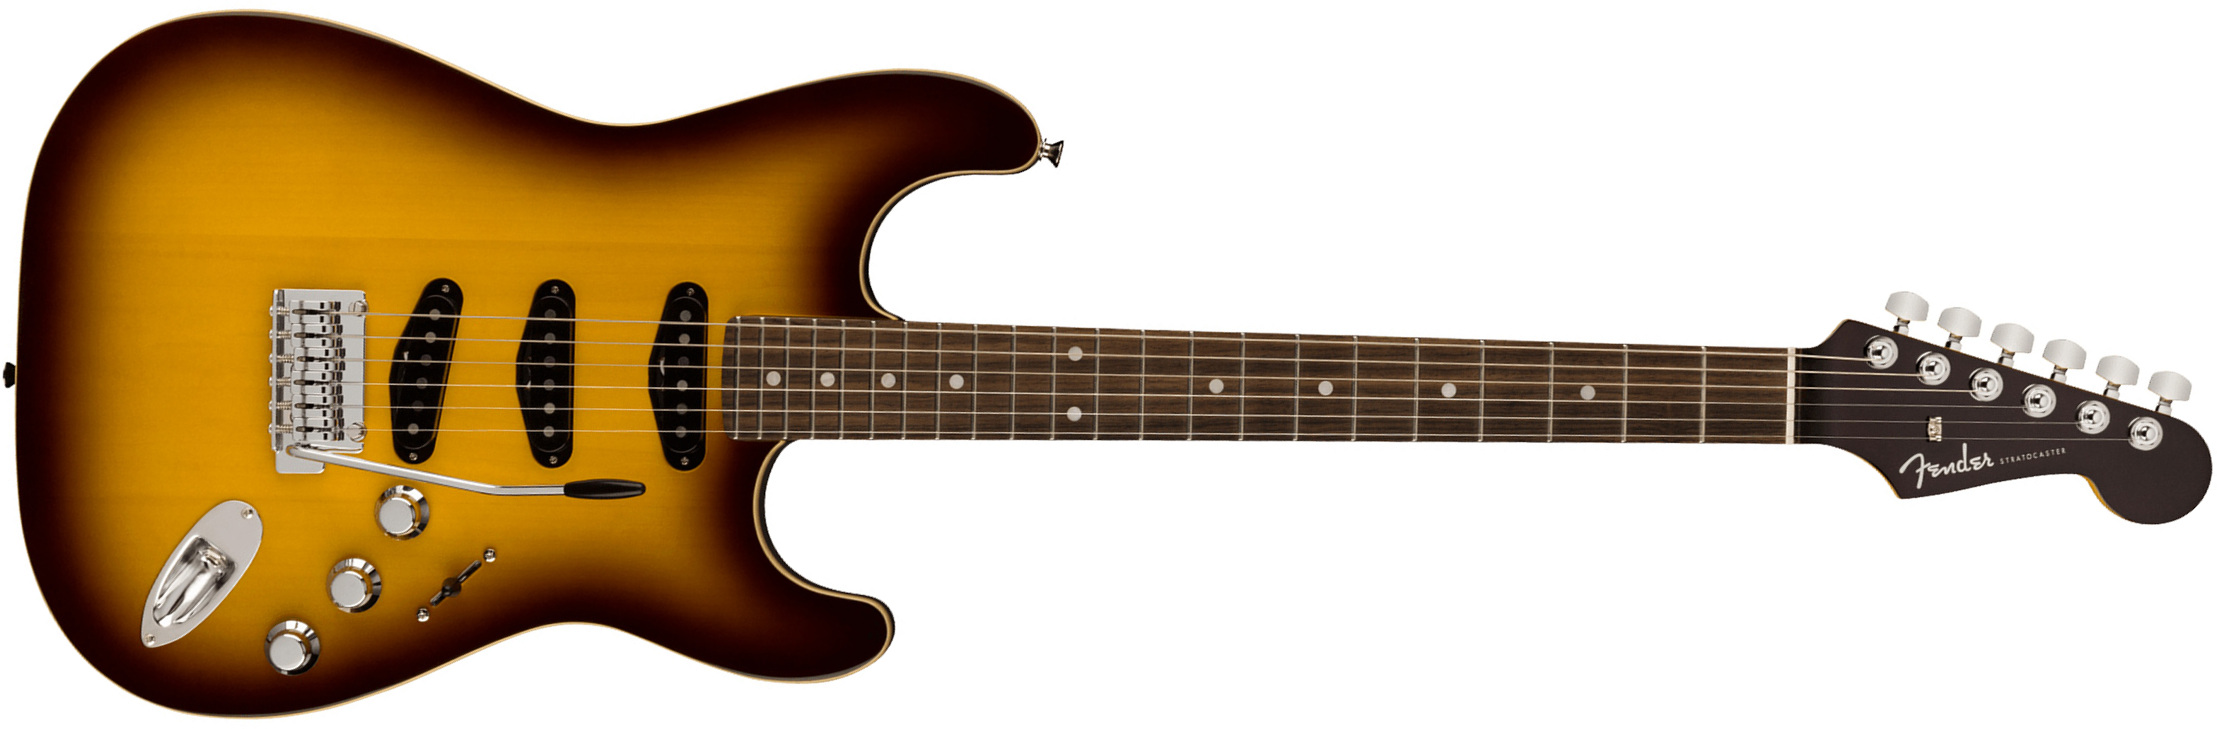 Fender Strat Aerodyne Special Jap 3s Trem Rw - Chocolate Burst - E-Gitarre in Str-Form - Main picture